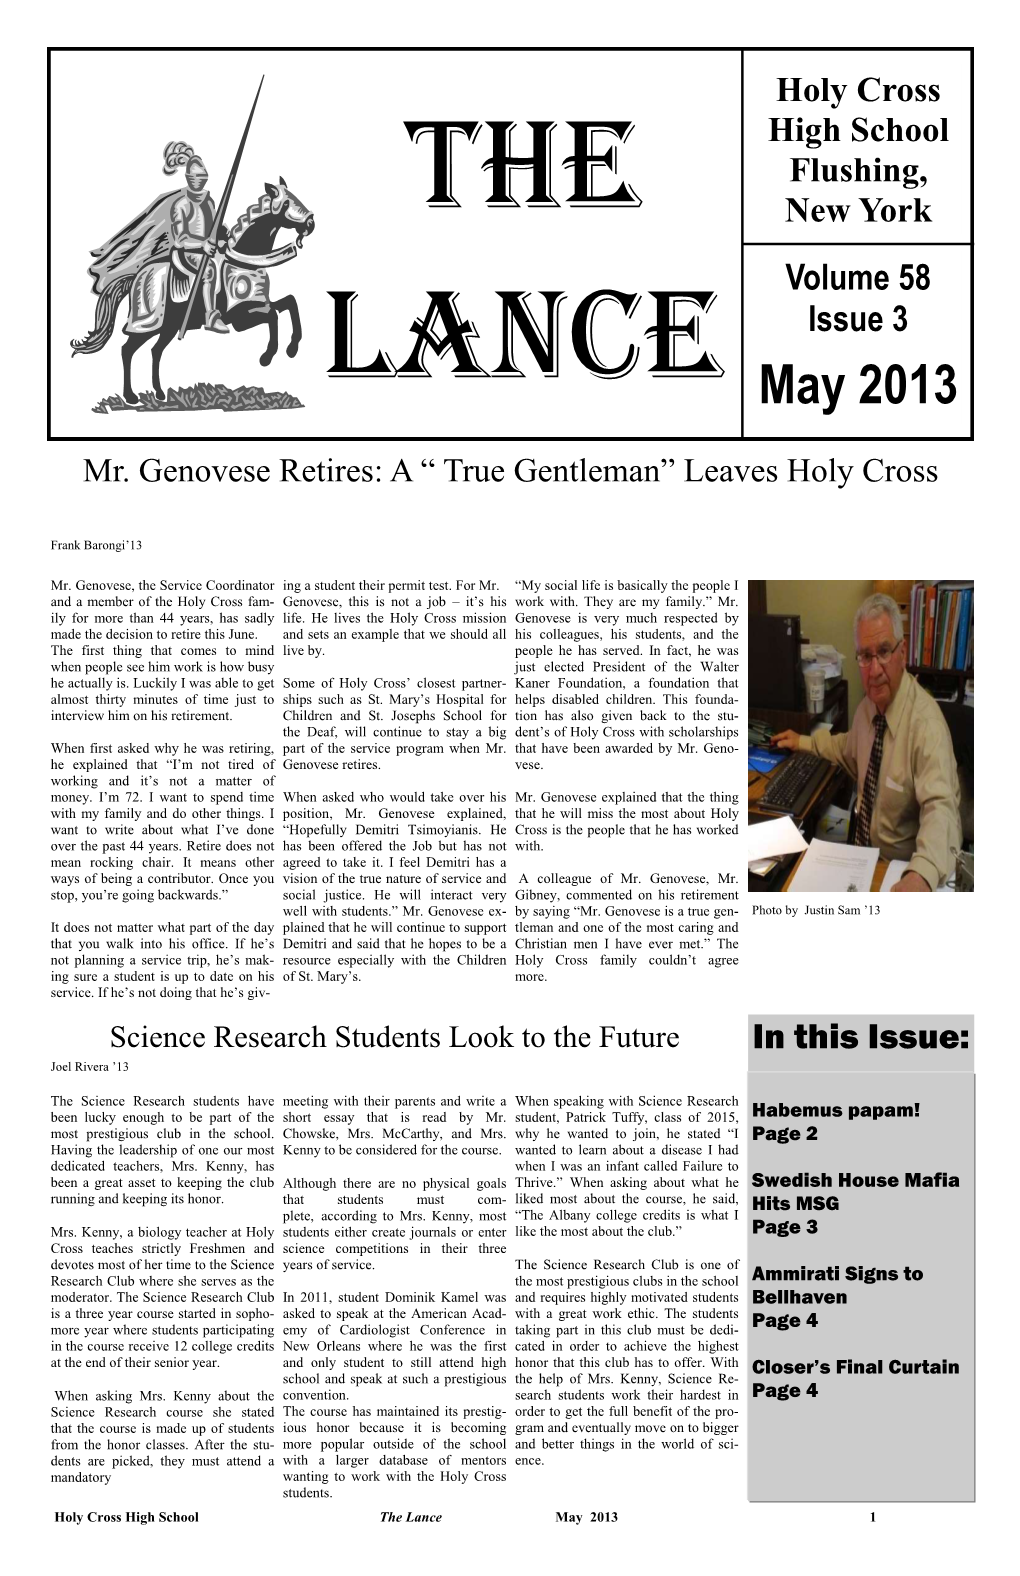 Volume 58 Issue 3 Holy Cross High School Flushing, New York May 2013